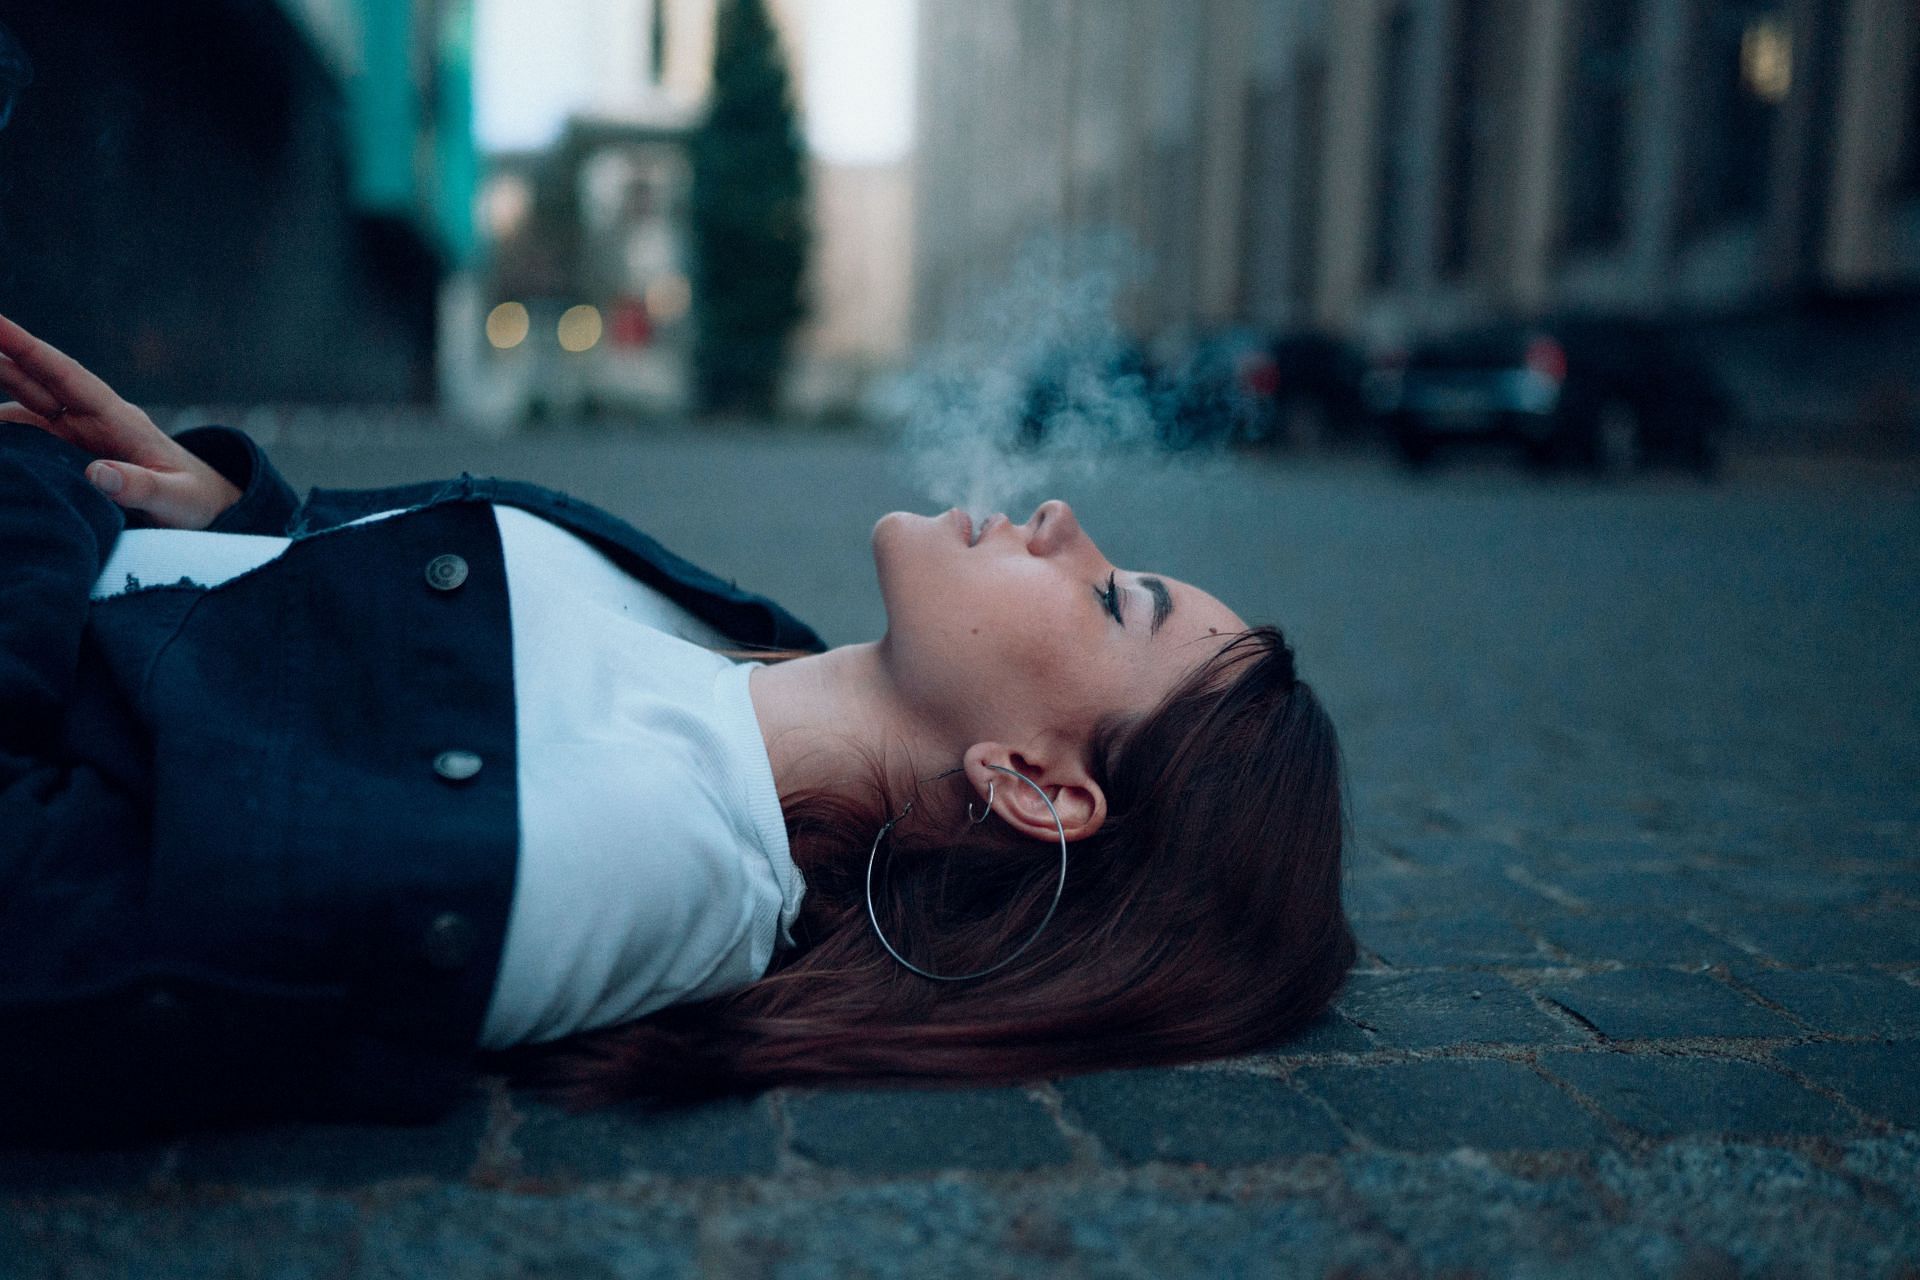 Smoking with asthma can kill you. (Image via Pexels/ Masha Raymers)